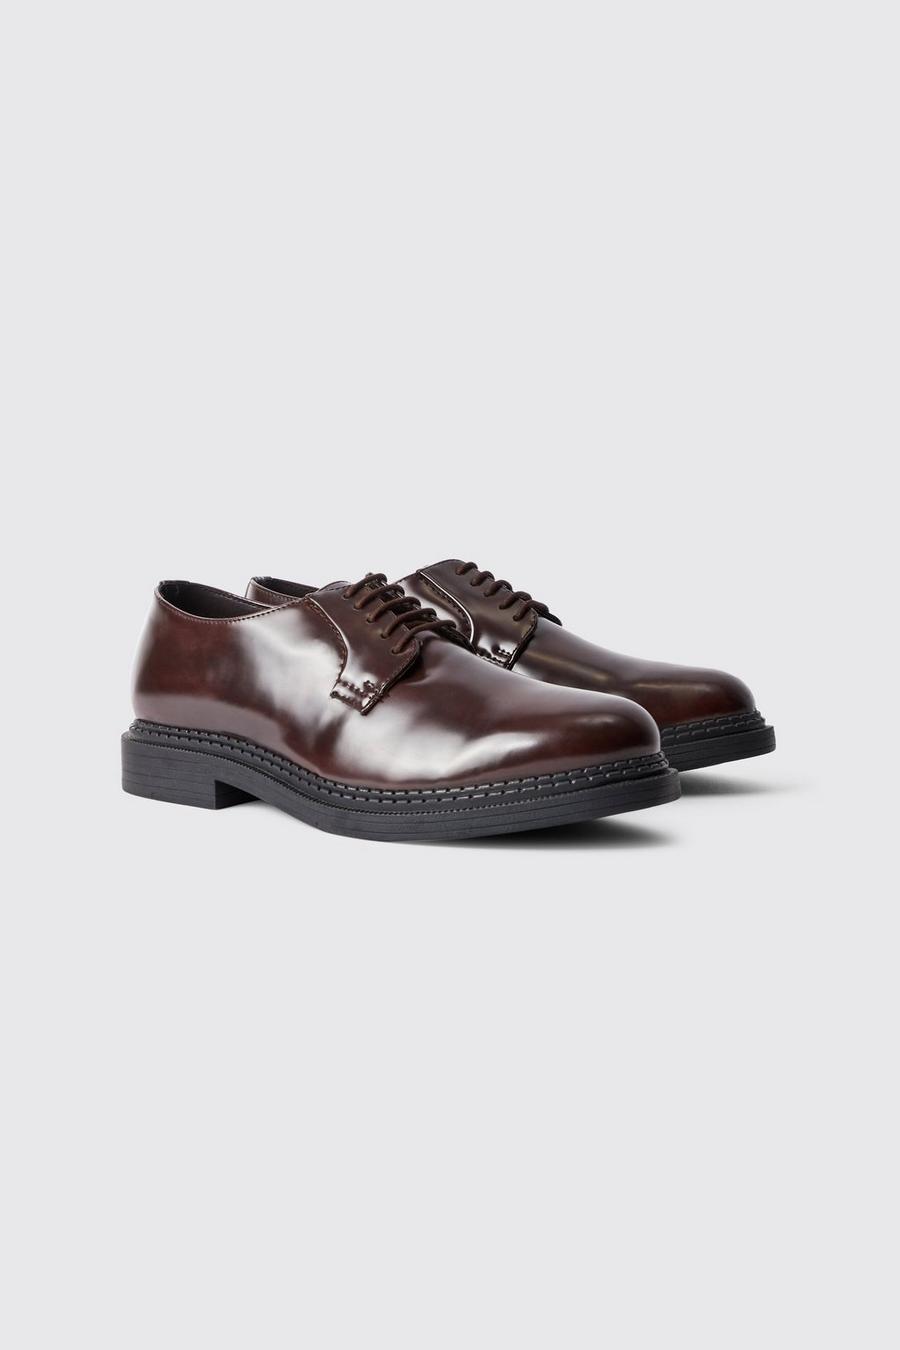 Chaussures à lacets habillées, Dark brown image number 1